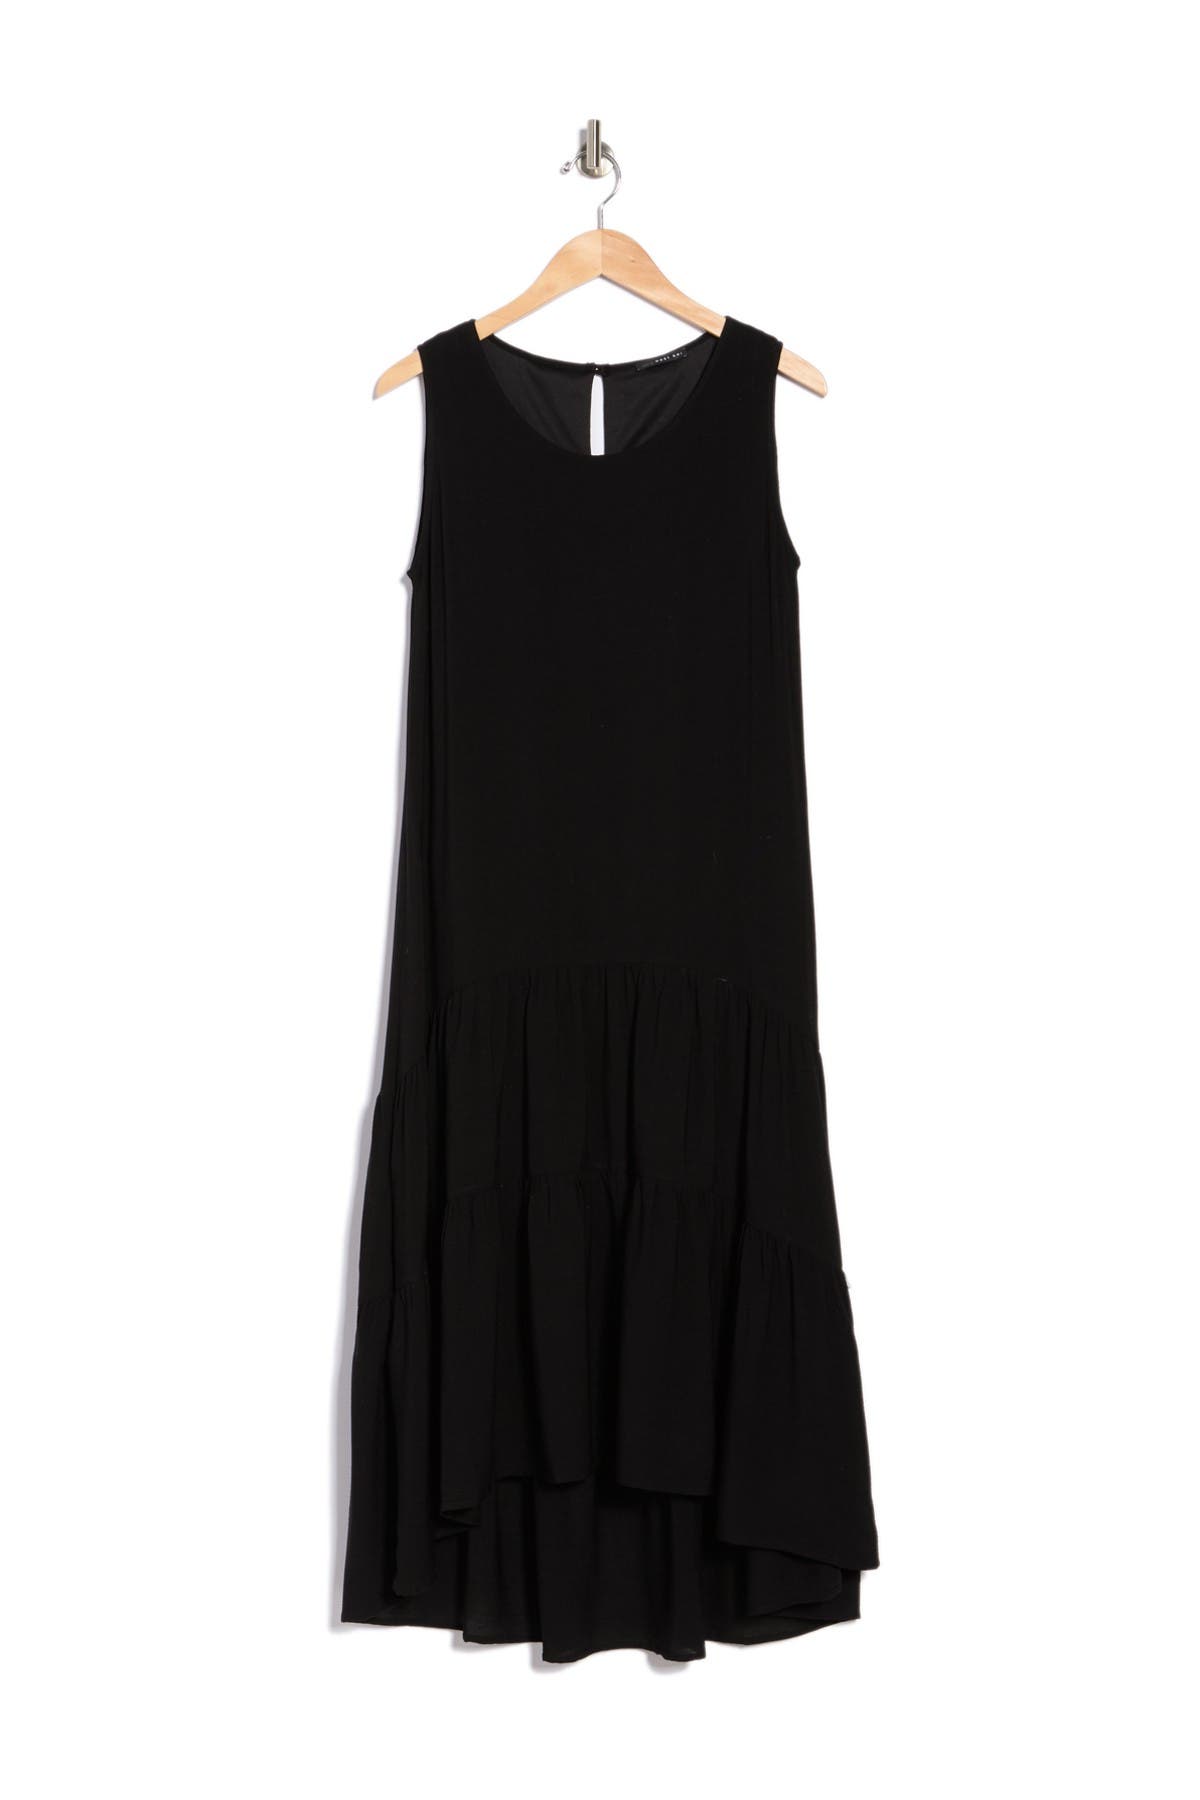 Buy > sleeveless high low dress > in stock